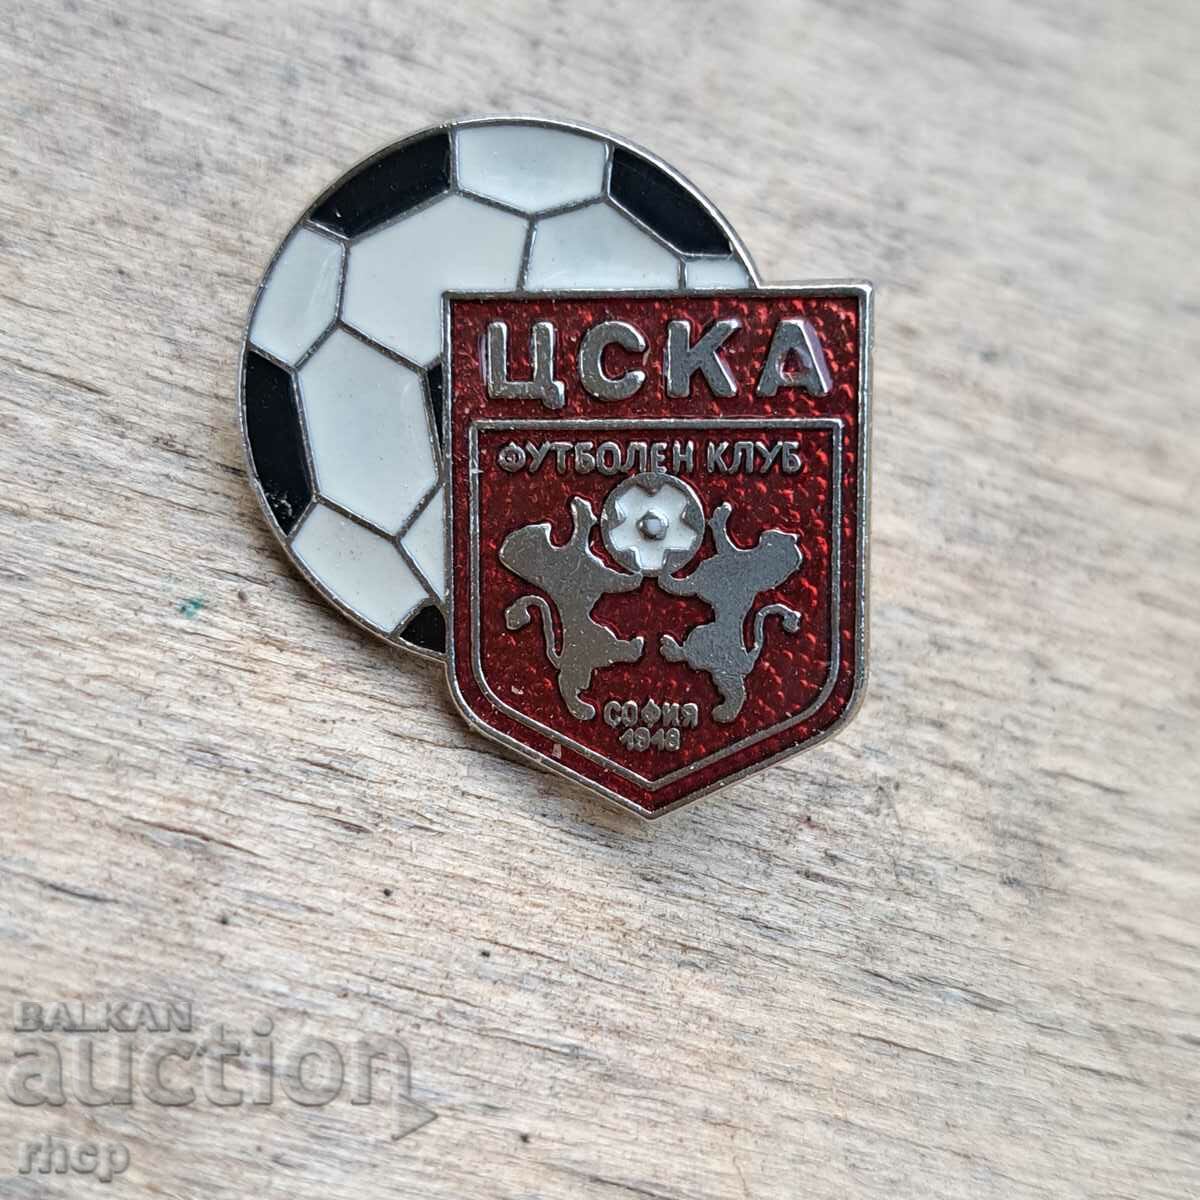 CSKA Sofia football club badge football